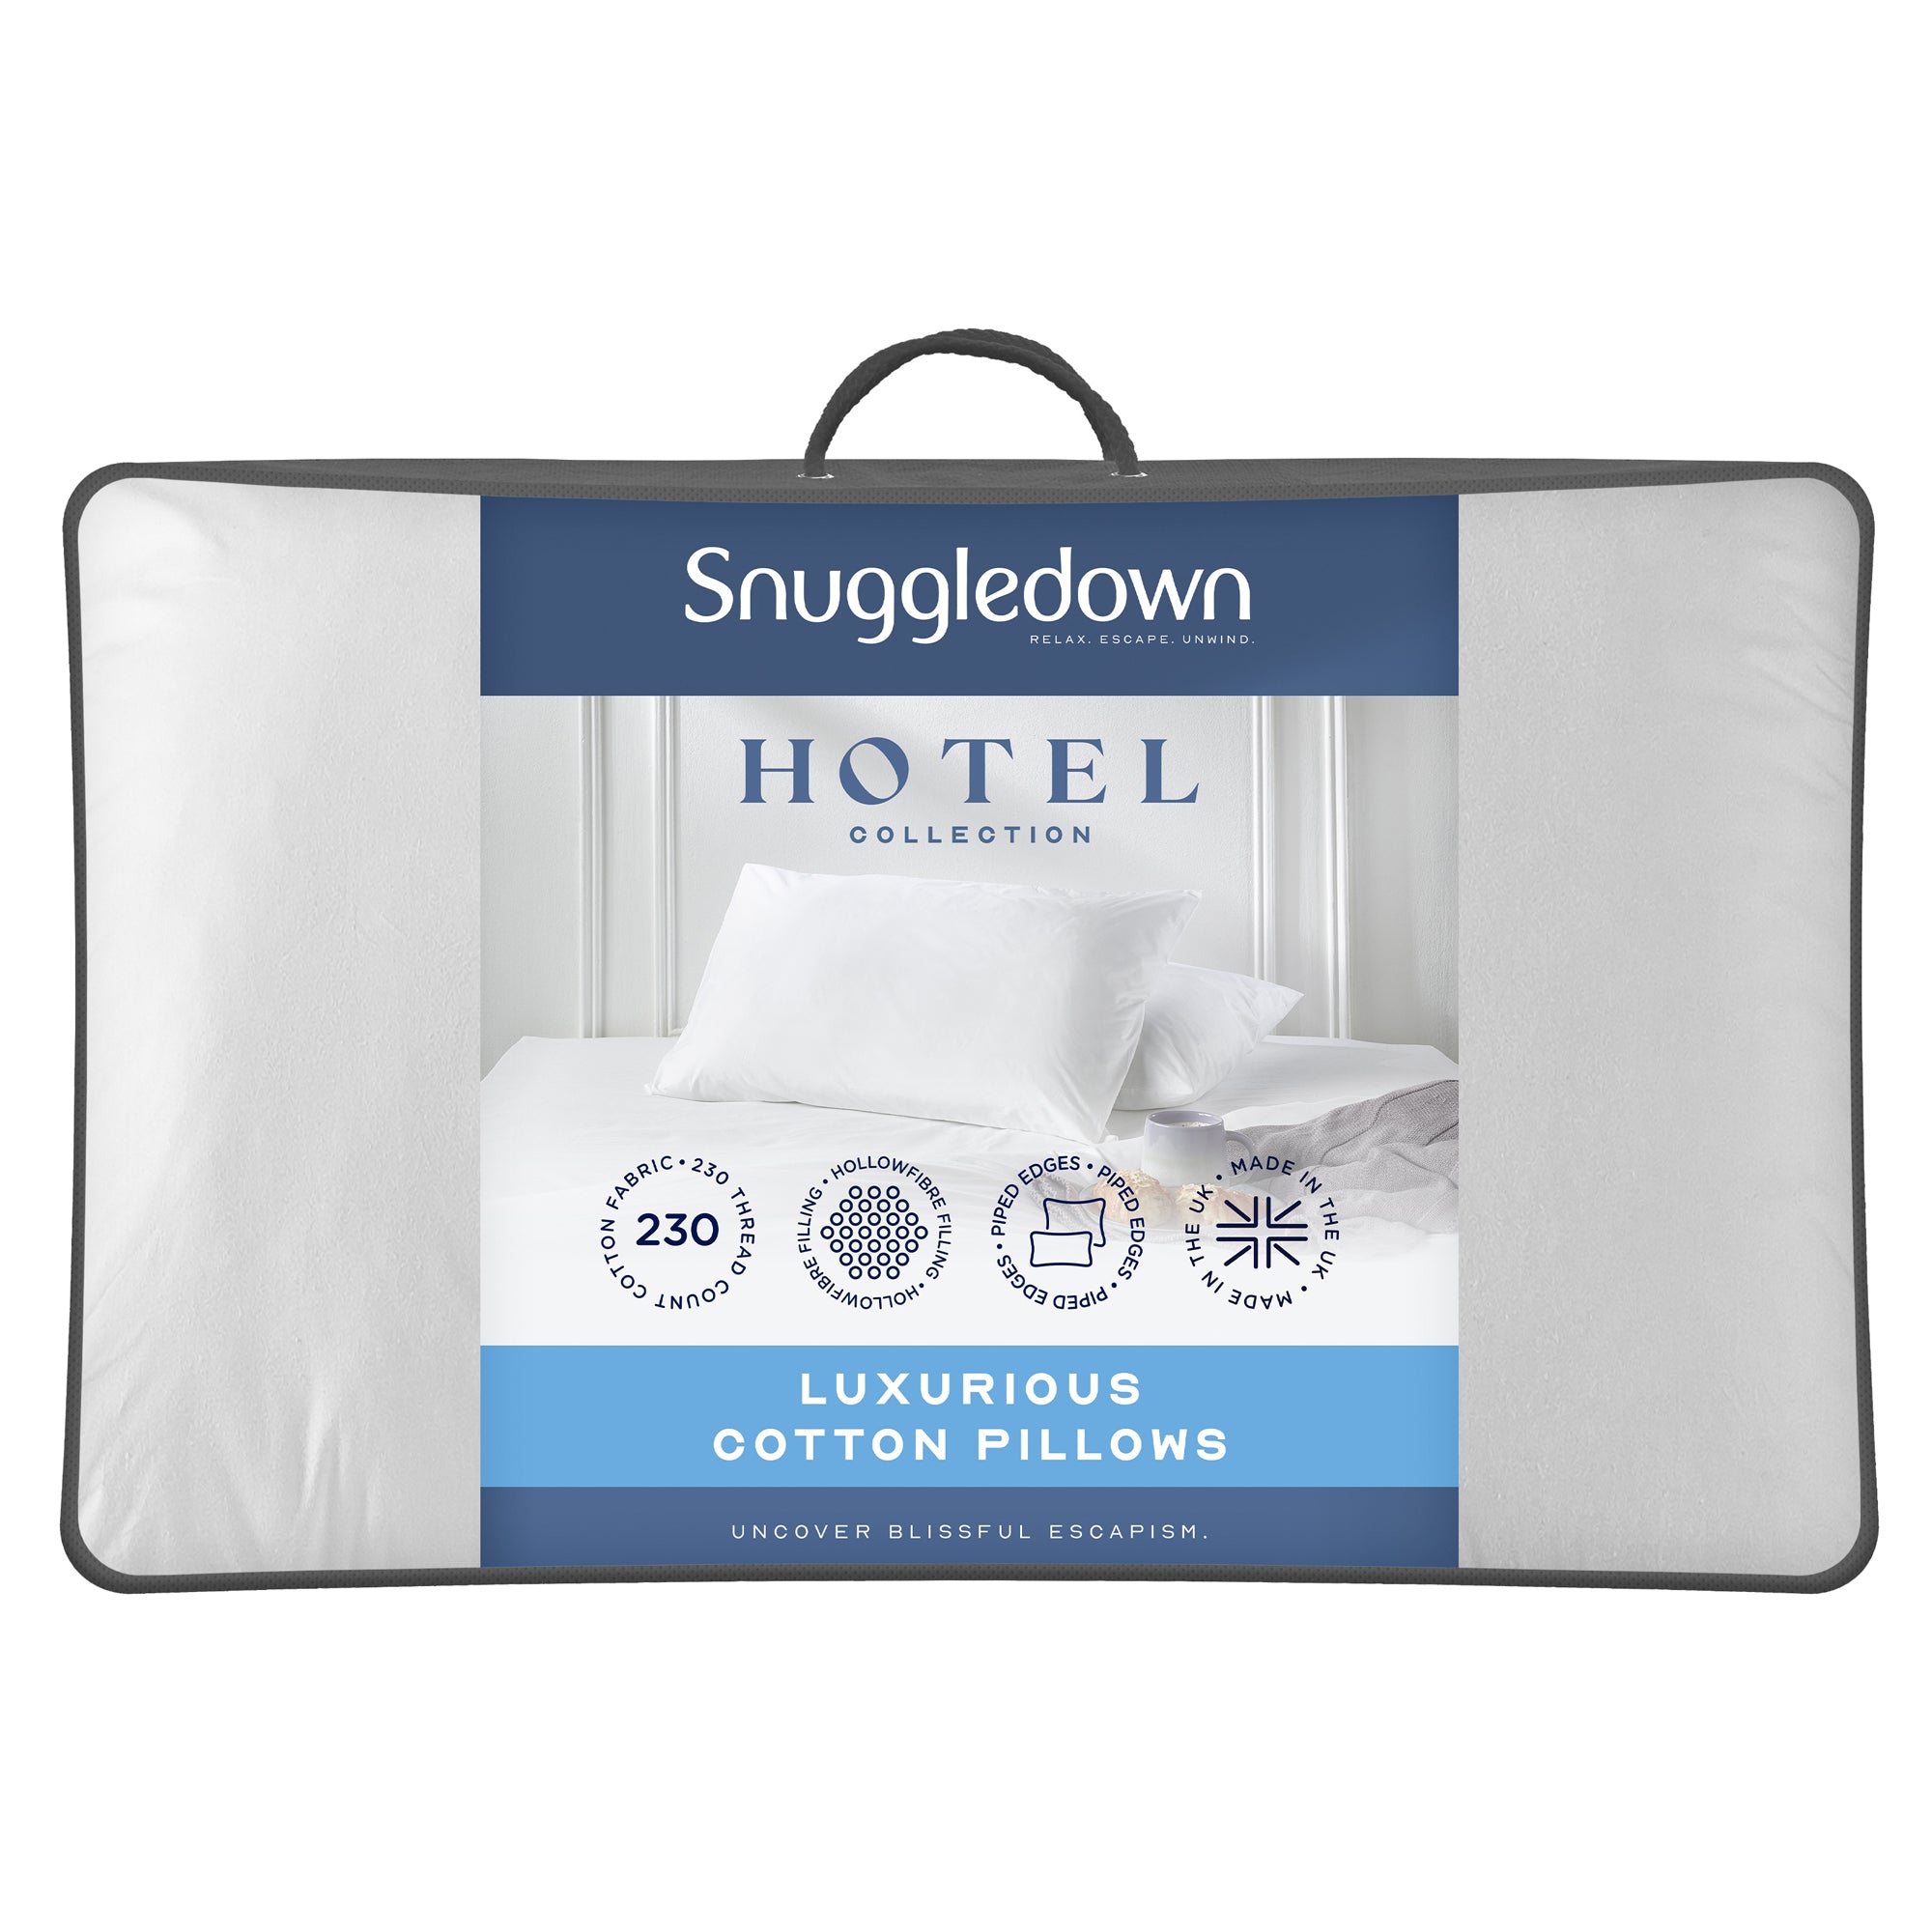 Snuggledown Clusterfibre Pillow Pair 1 Shaws Department Stores